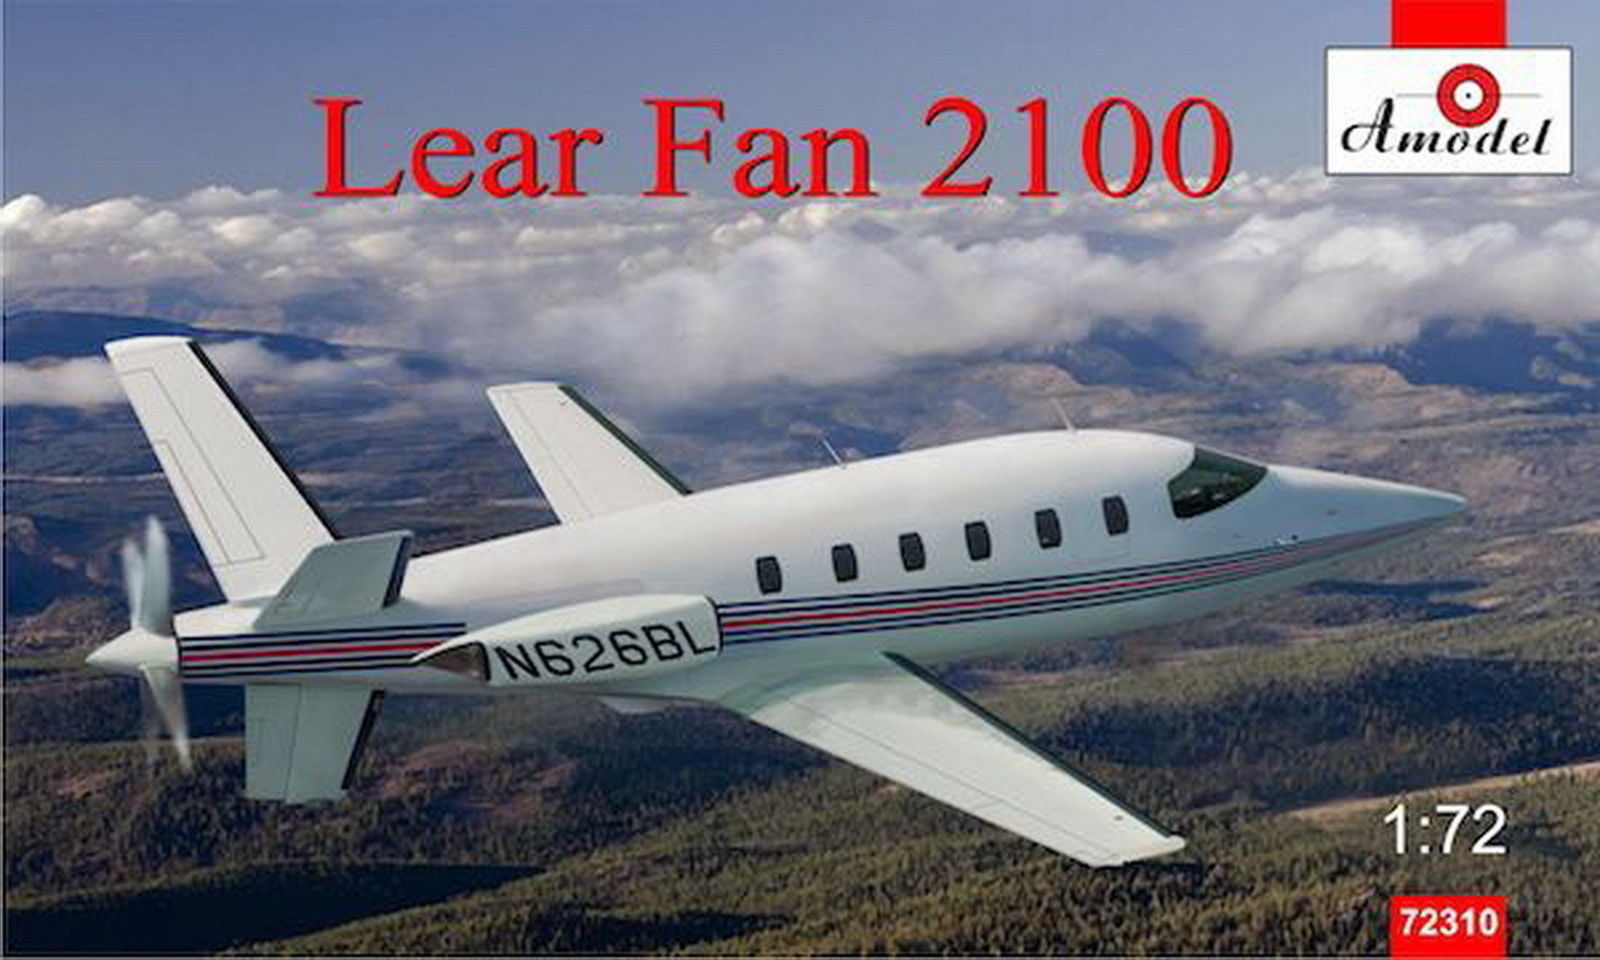 Amodel 1/72 LearAvia Lear Fan 2100 turboprop aircraft prototype